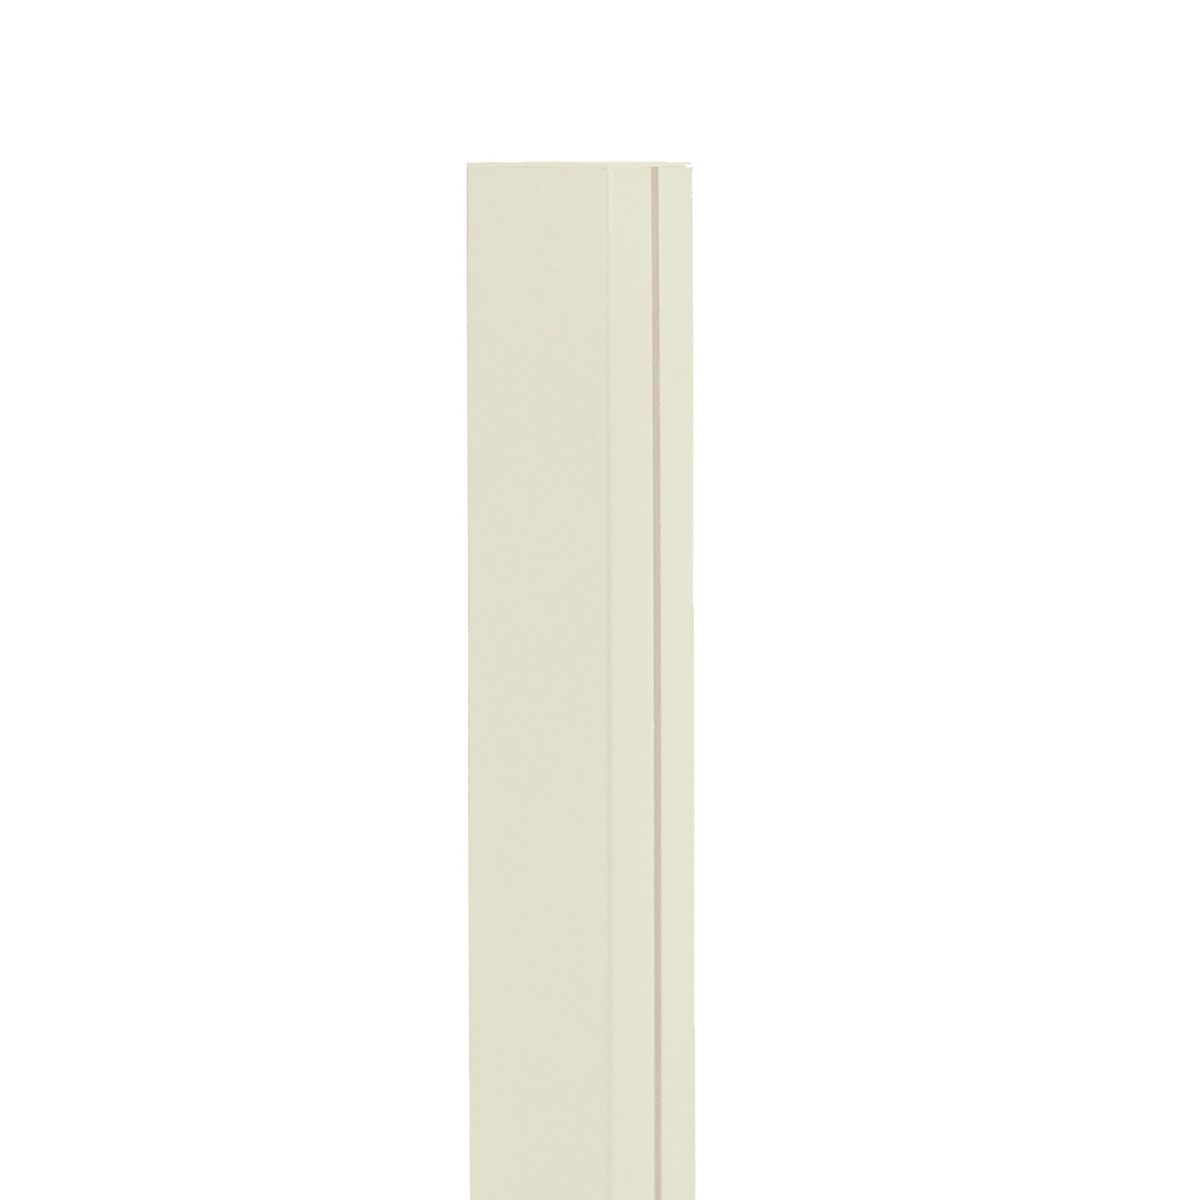 Nortene  ALUPOST 115 BL x4 (poteau aluminium) Blanc albâtre 1.15m